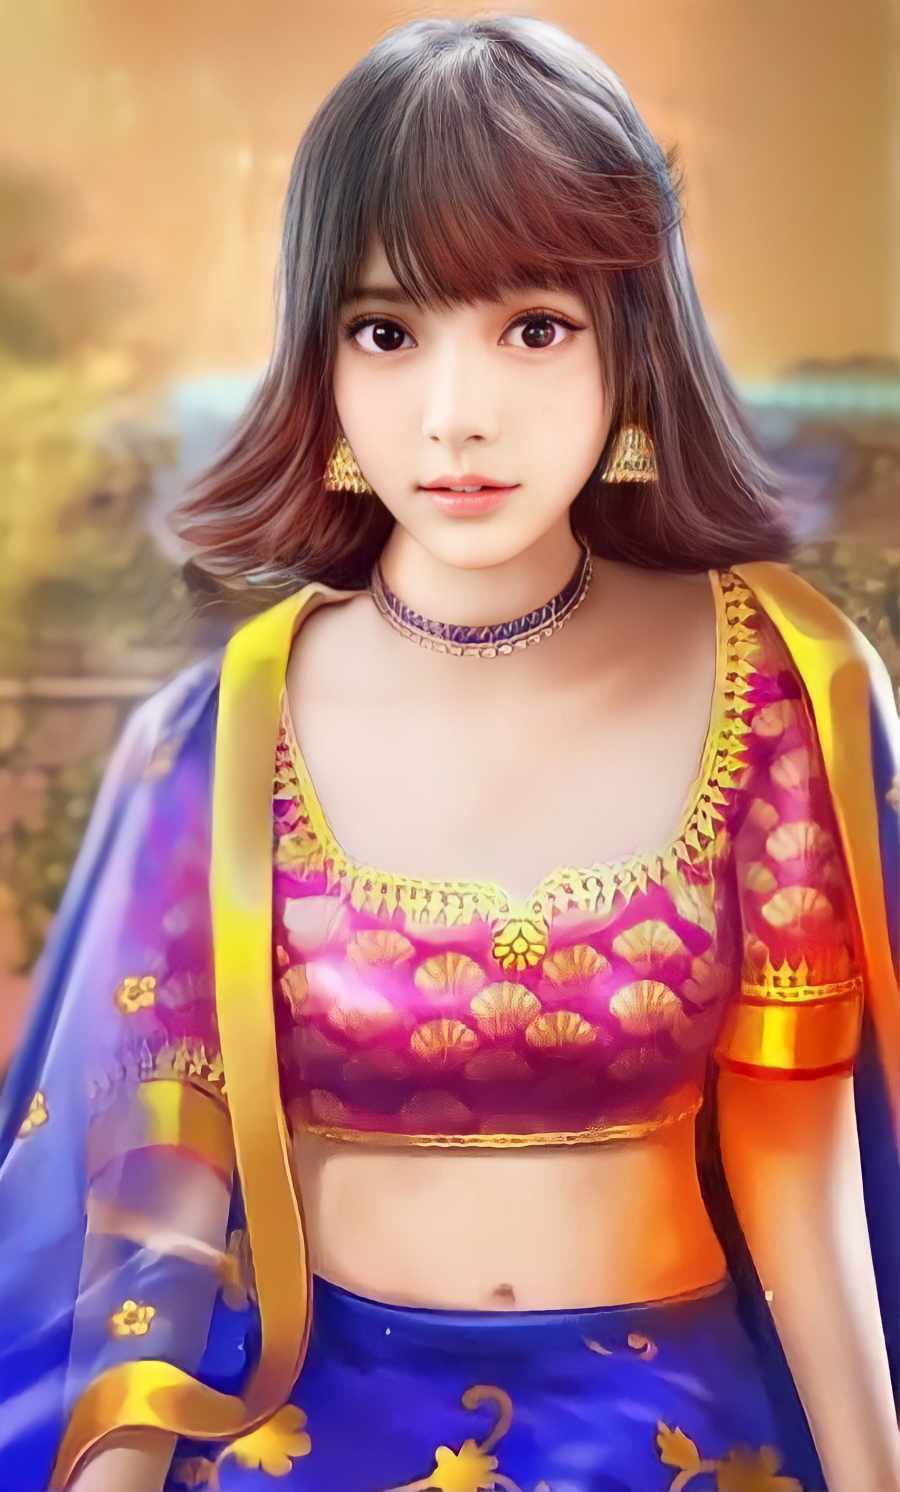 Indian girl iPhone Wallpaper